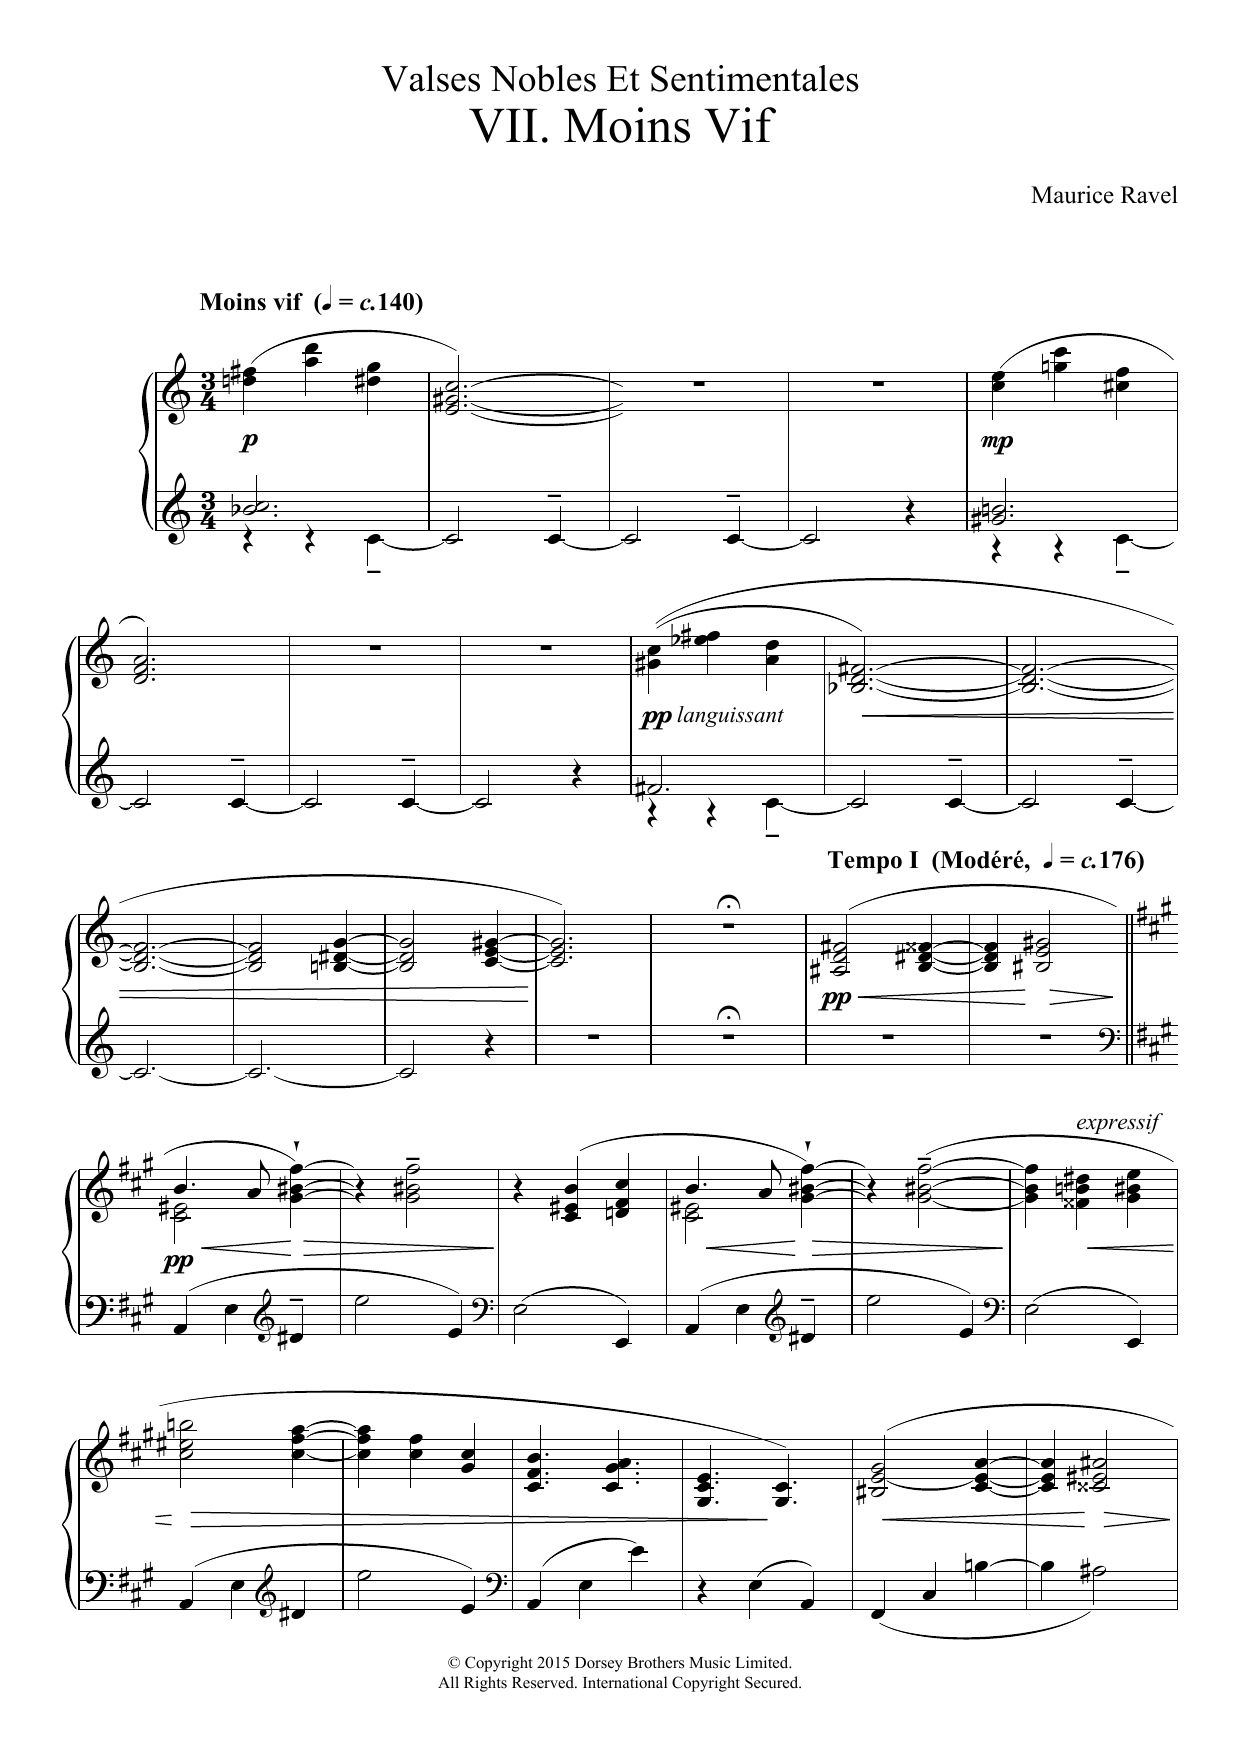 Maurice Ravel Valses Nobles Et Sentimentales - VII. Moins Vif Sheet Music Notes & Chords for Piano - Download or Print PDF